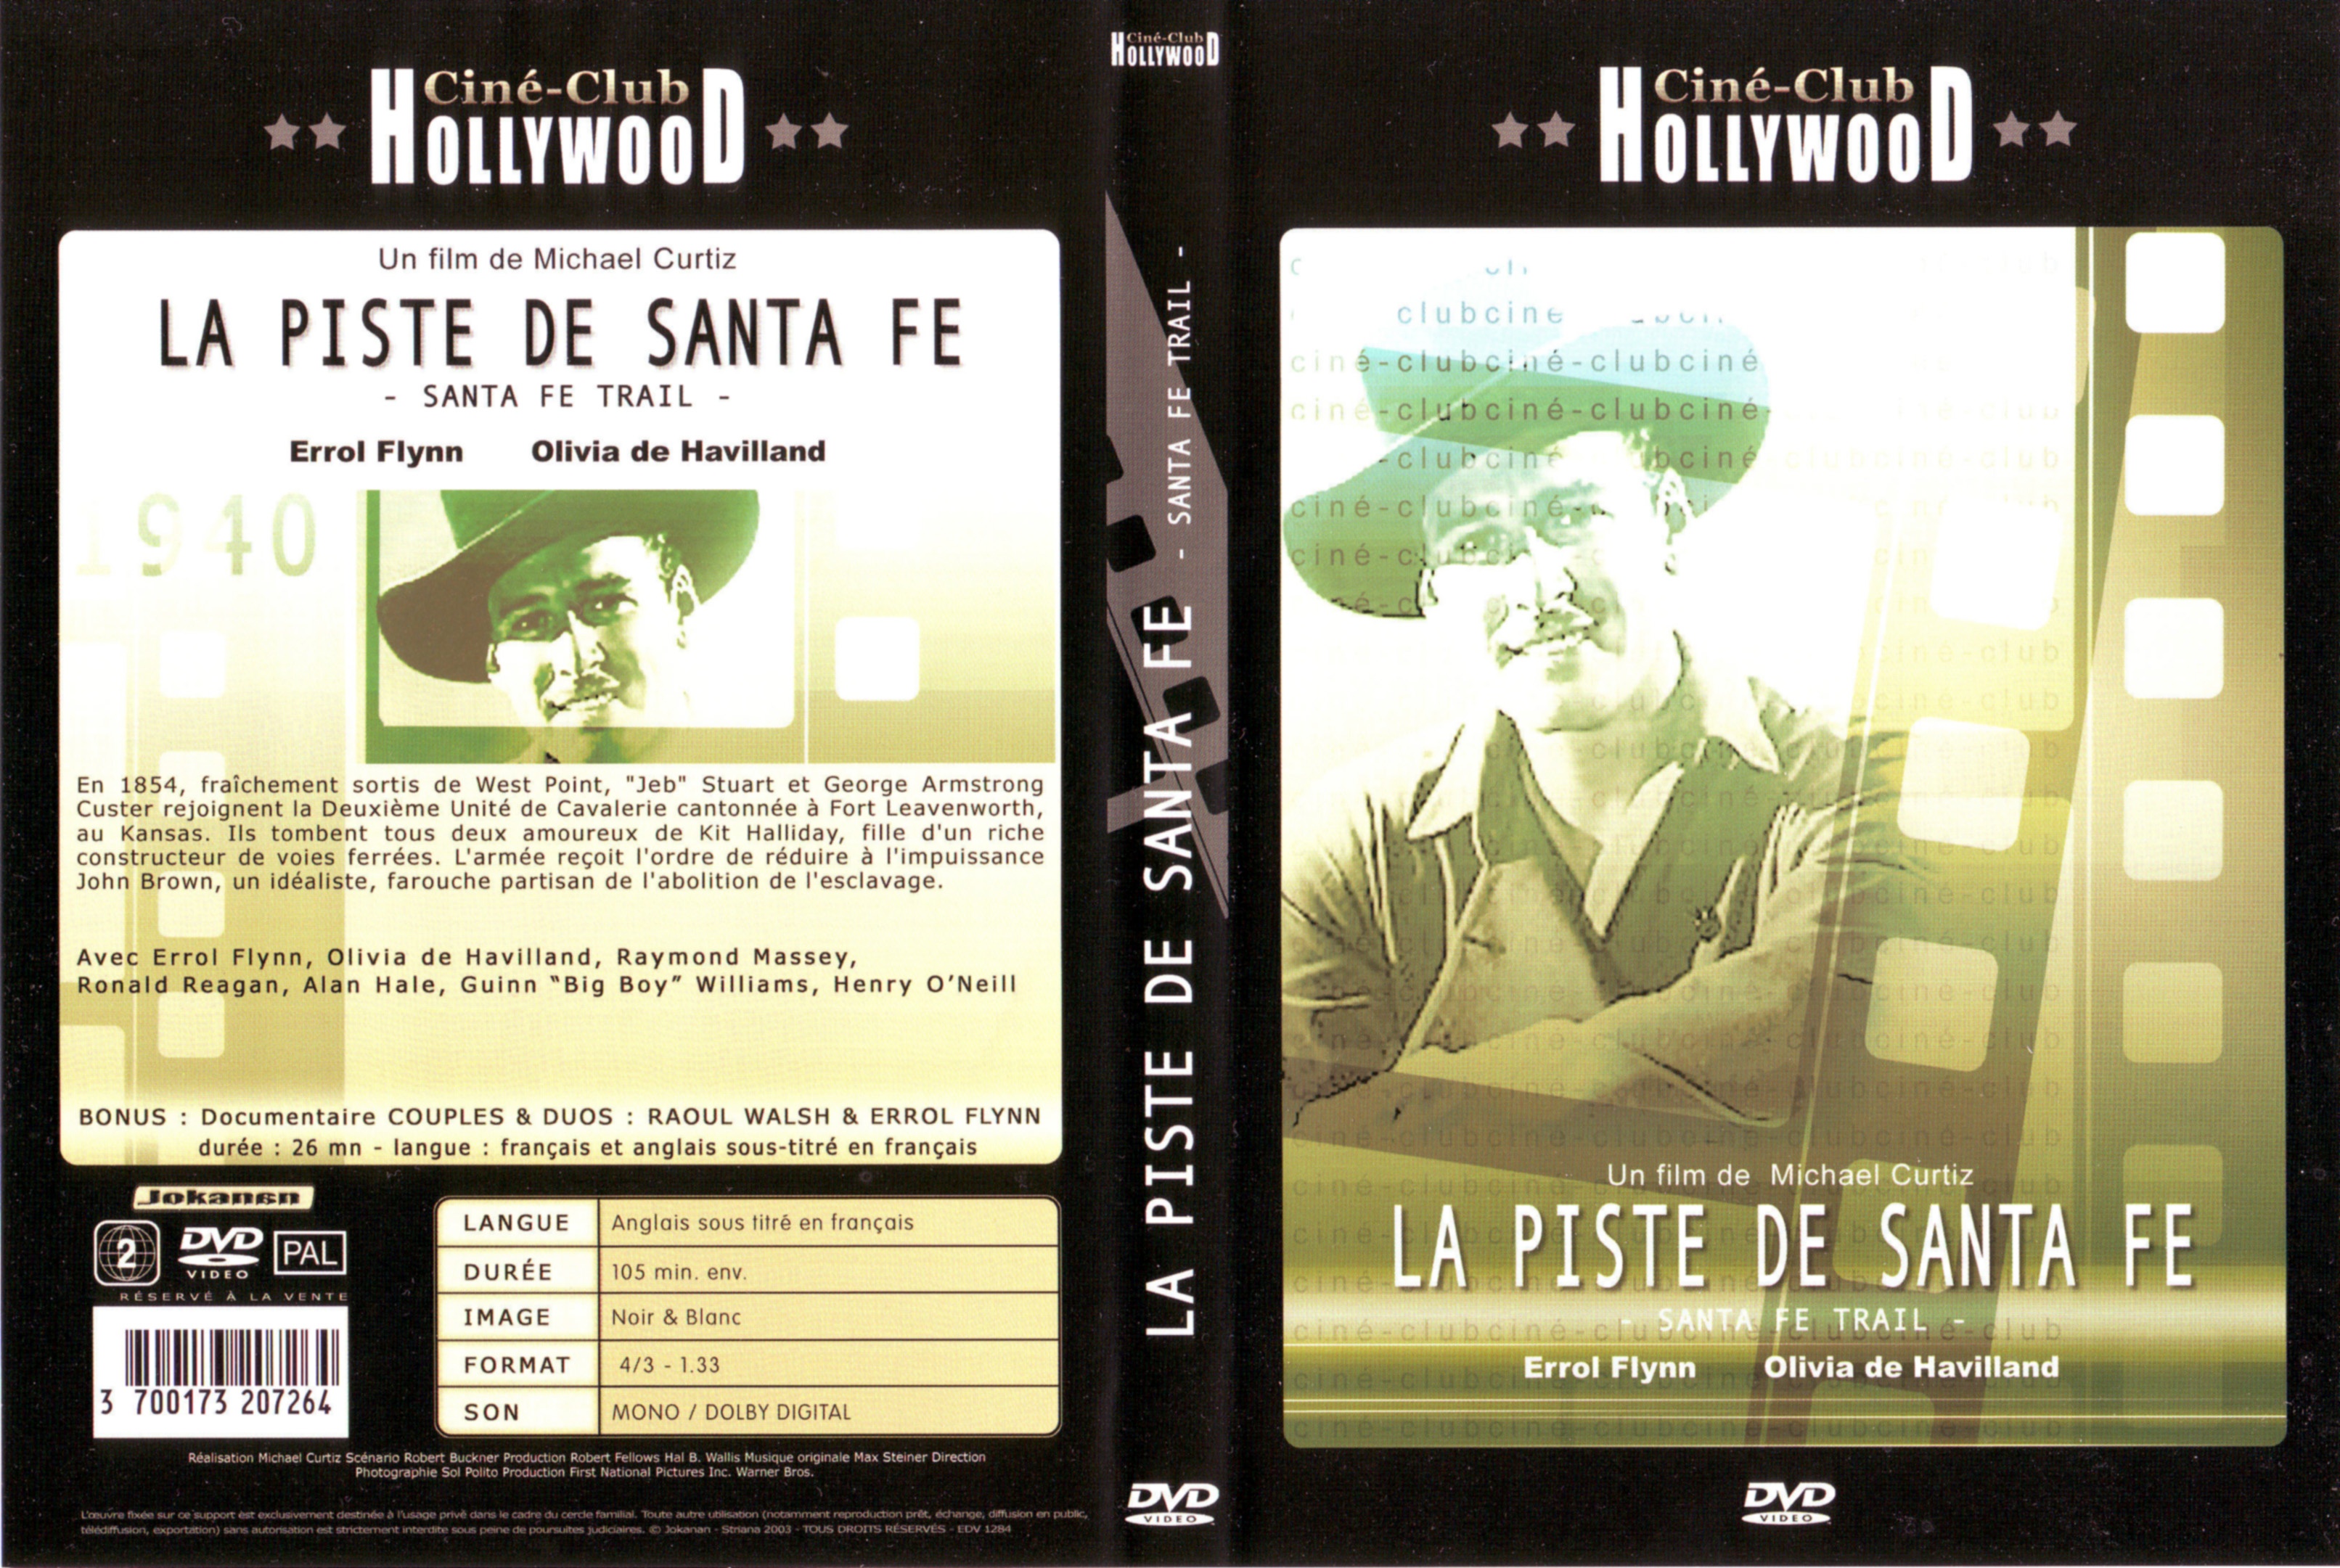 Jaquette DVD La piste de Santa Fe v2